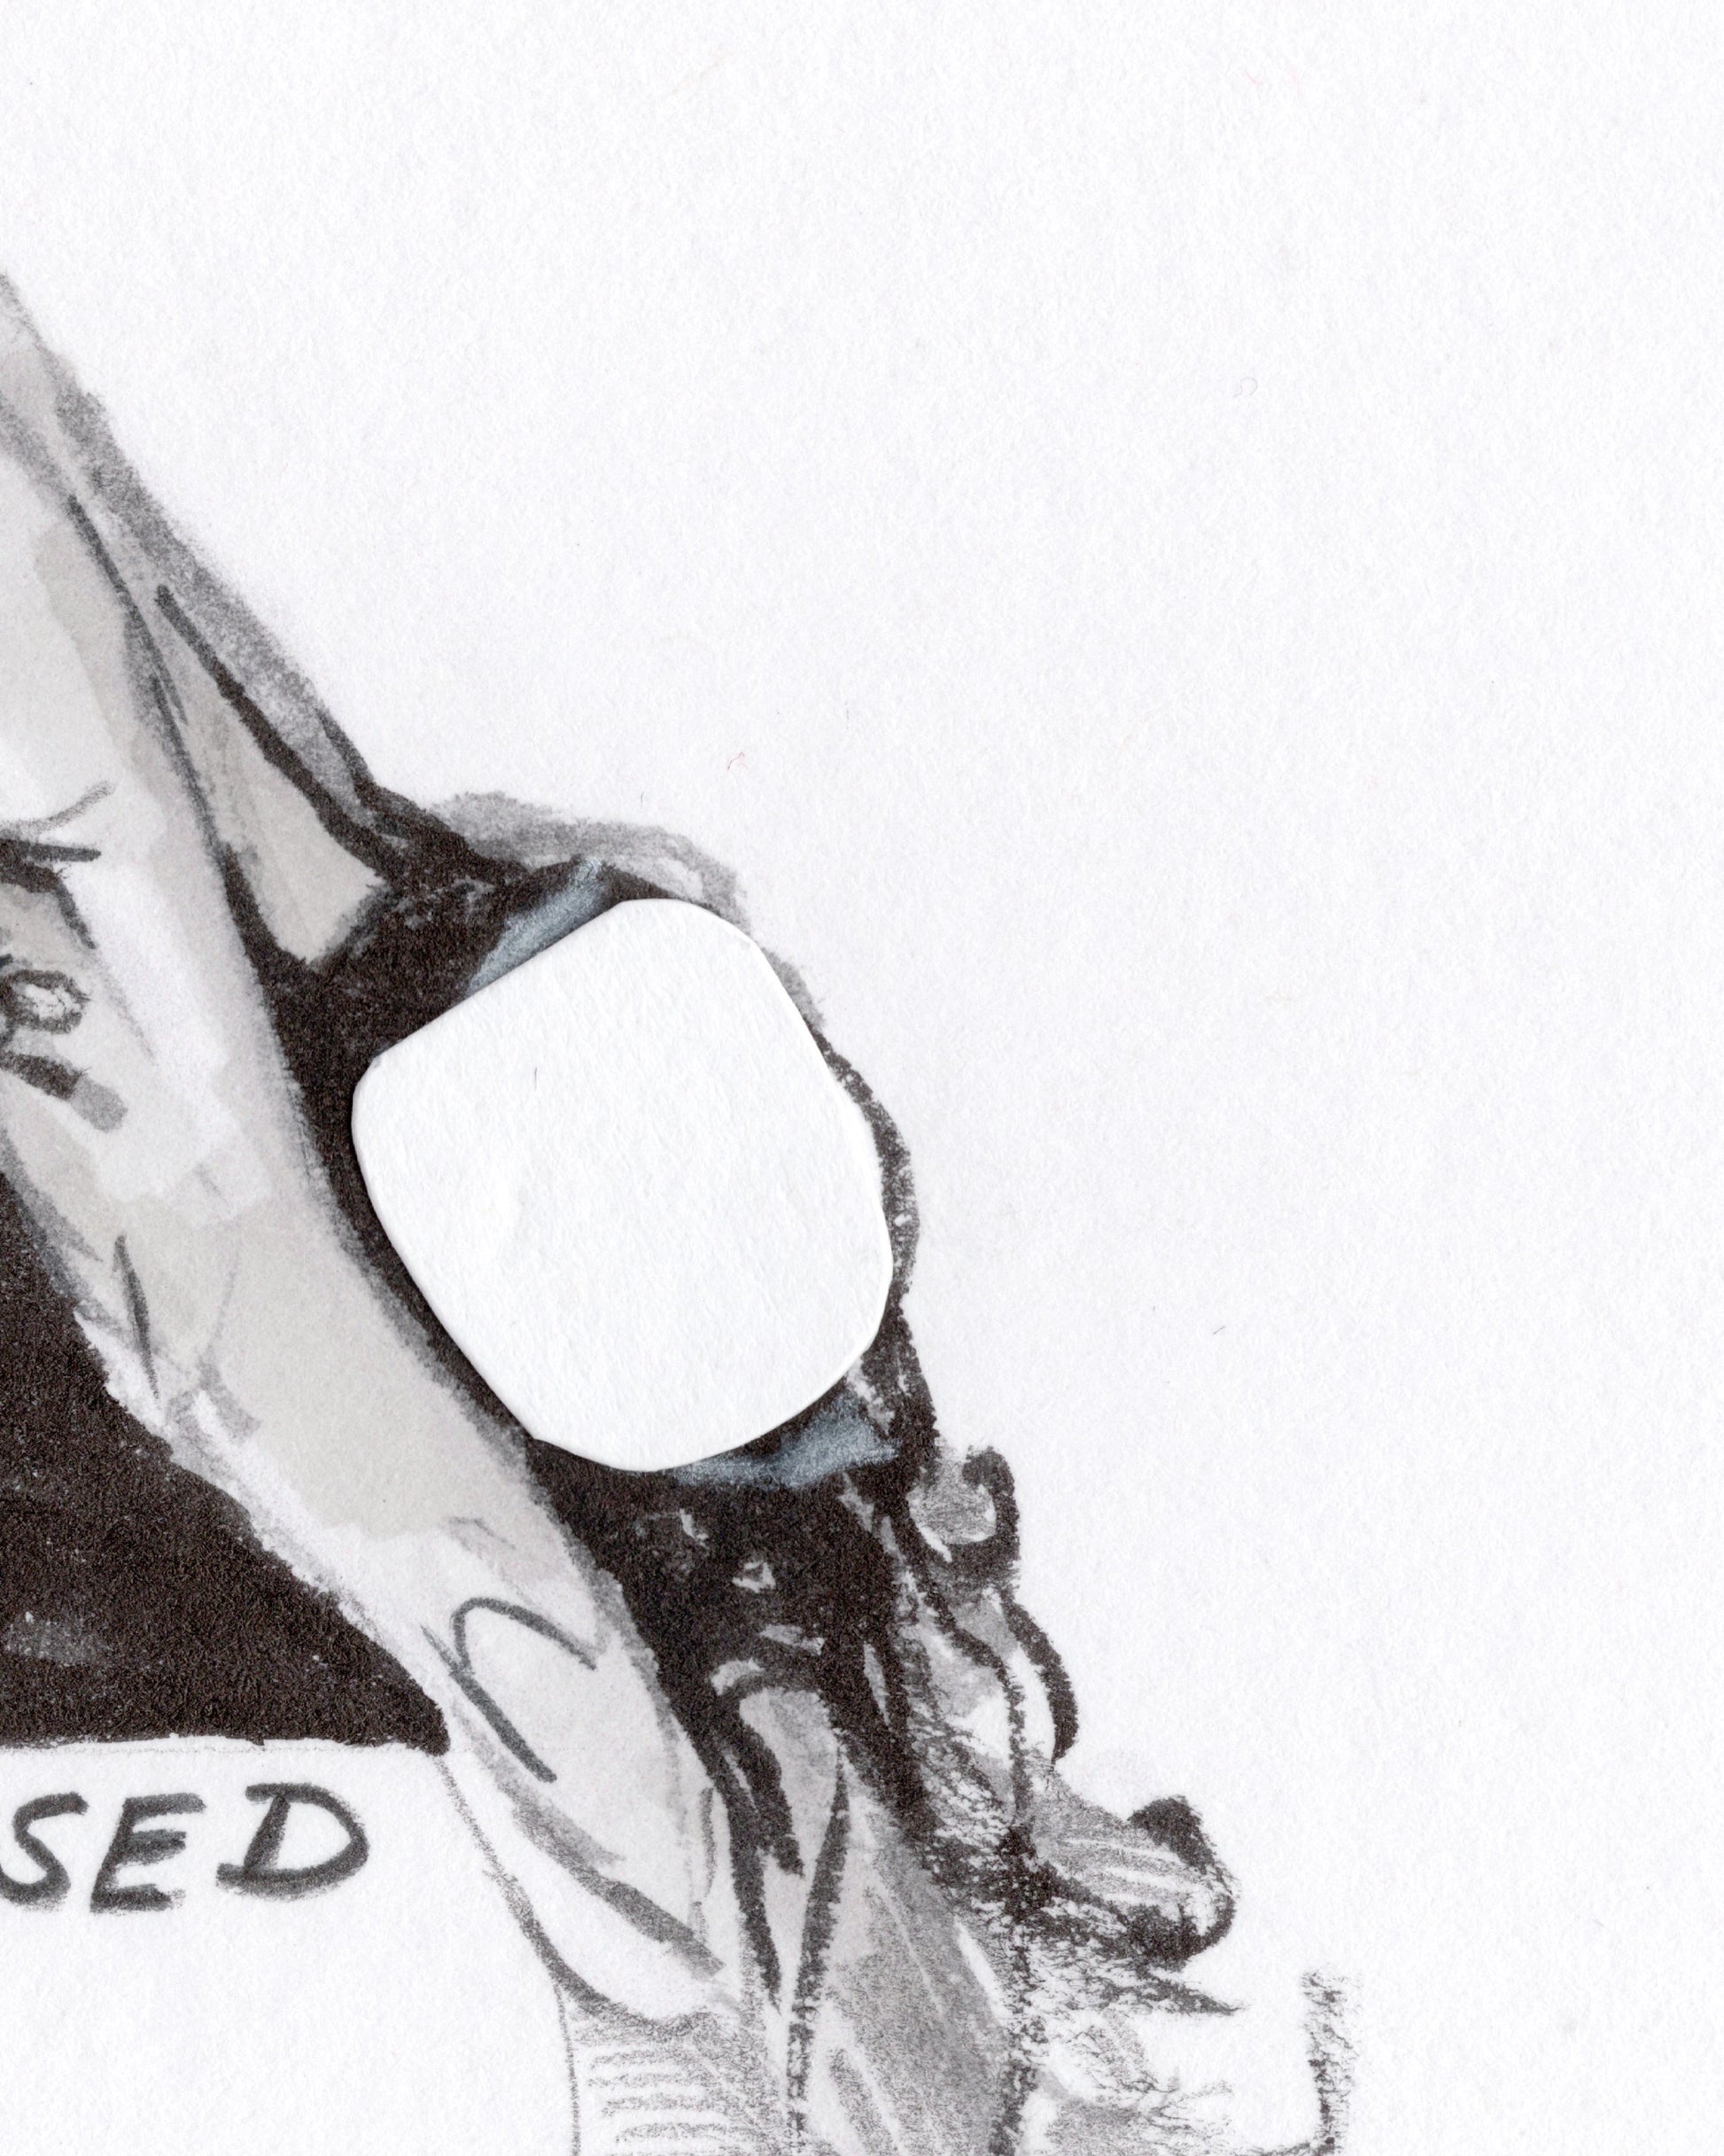 "Lust" Sensual Ink drawing featuring a female nude figure by Tobias Kruppa - Original Artwork